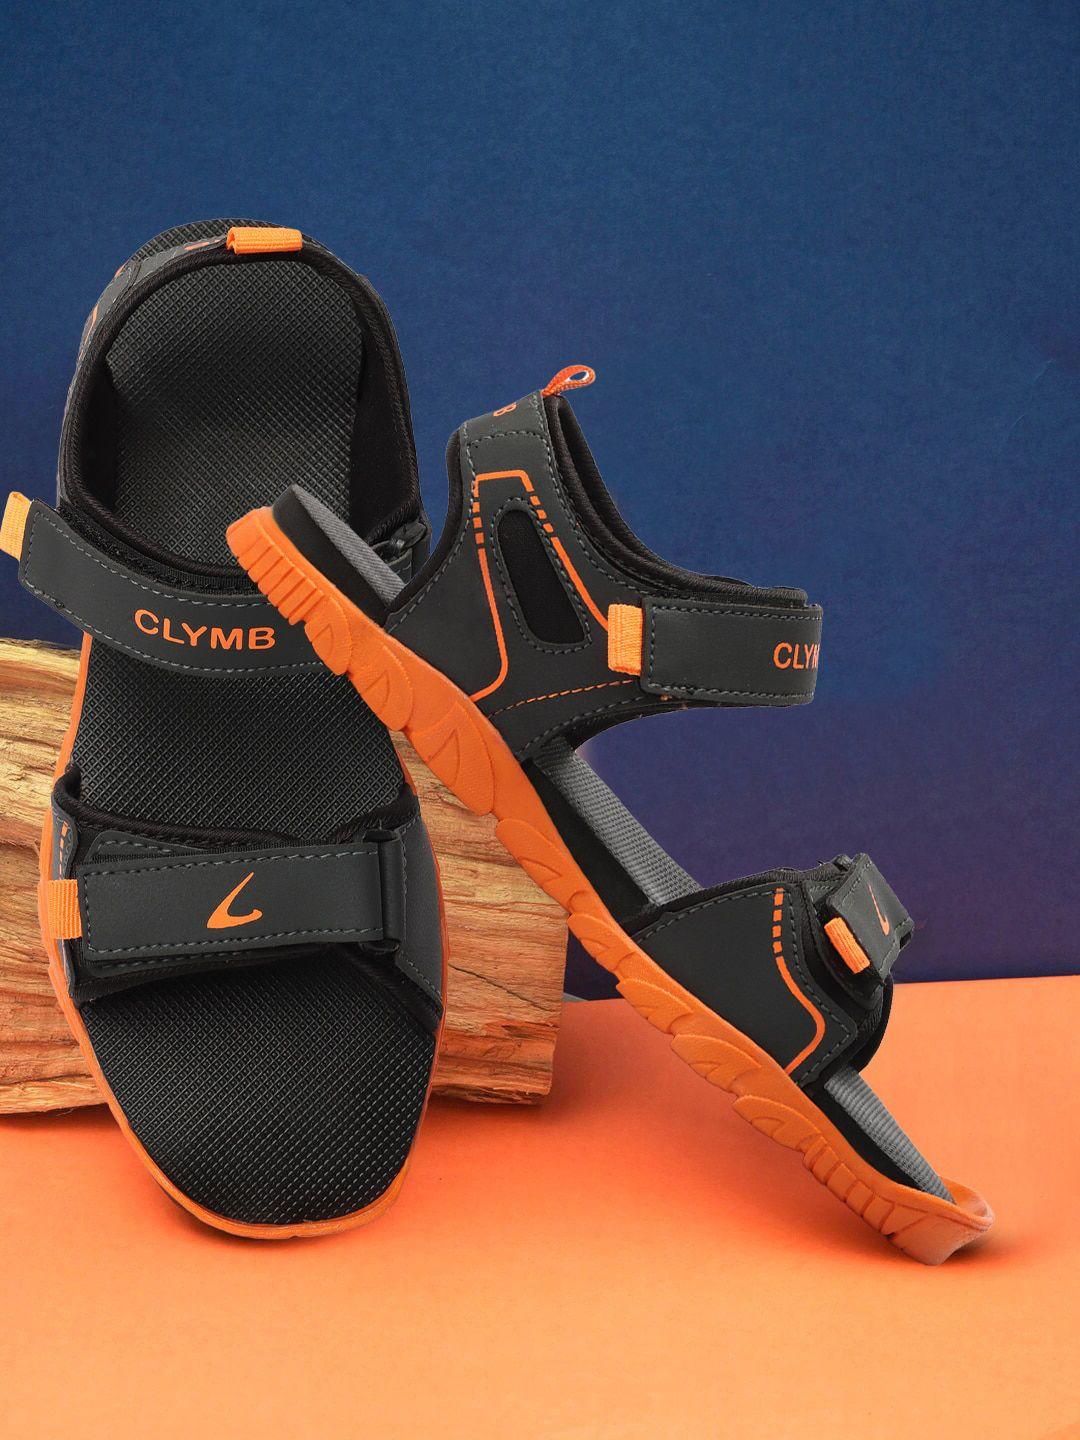 clymb men spa-13 brand logo printed comfort fit velcro closure sports sandals